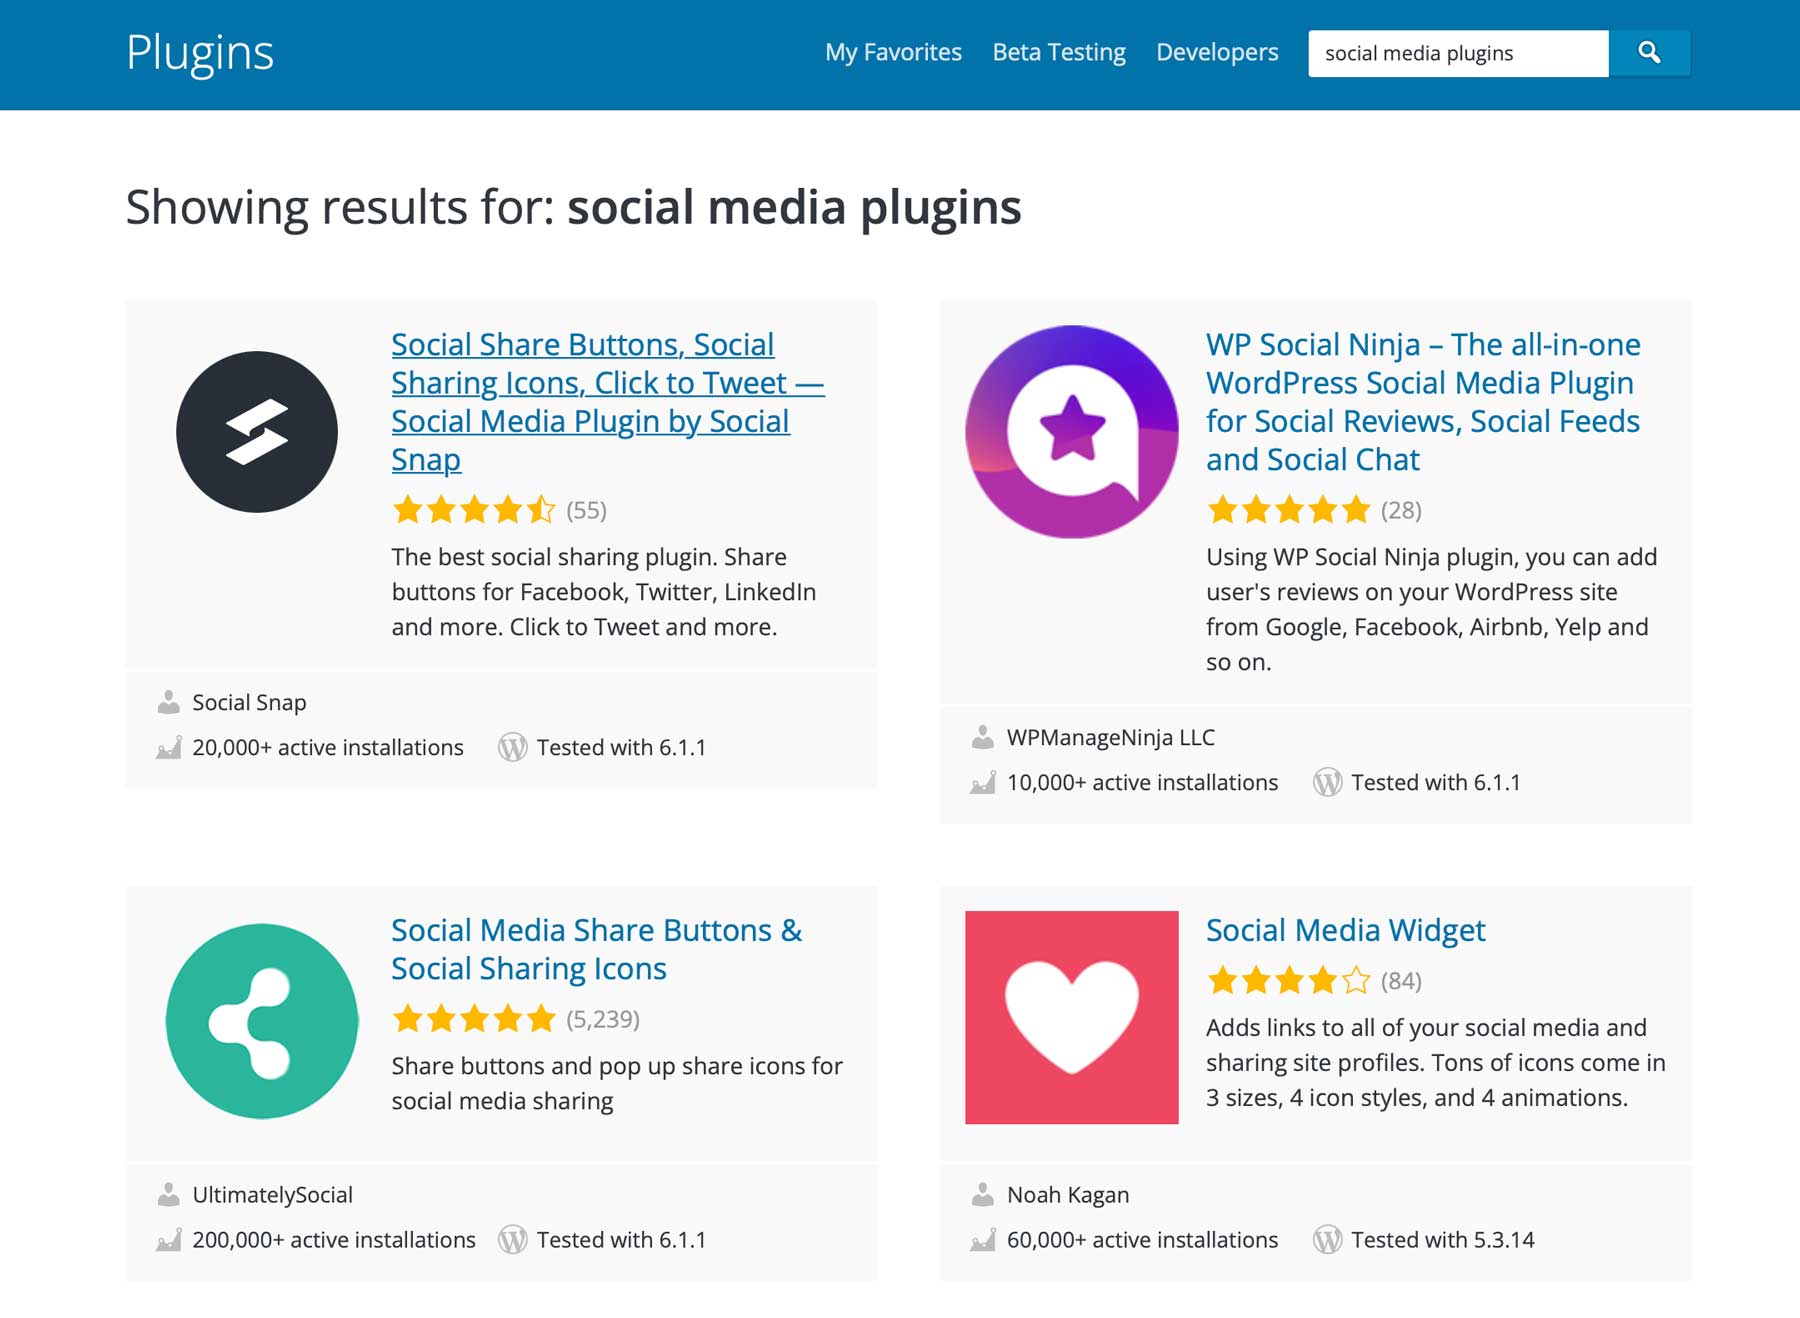 Social media buttons plugins in WordPress